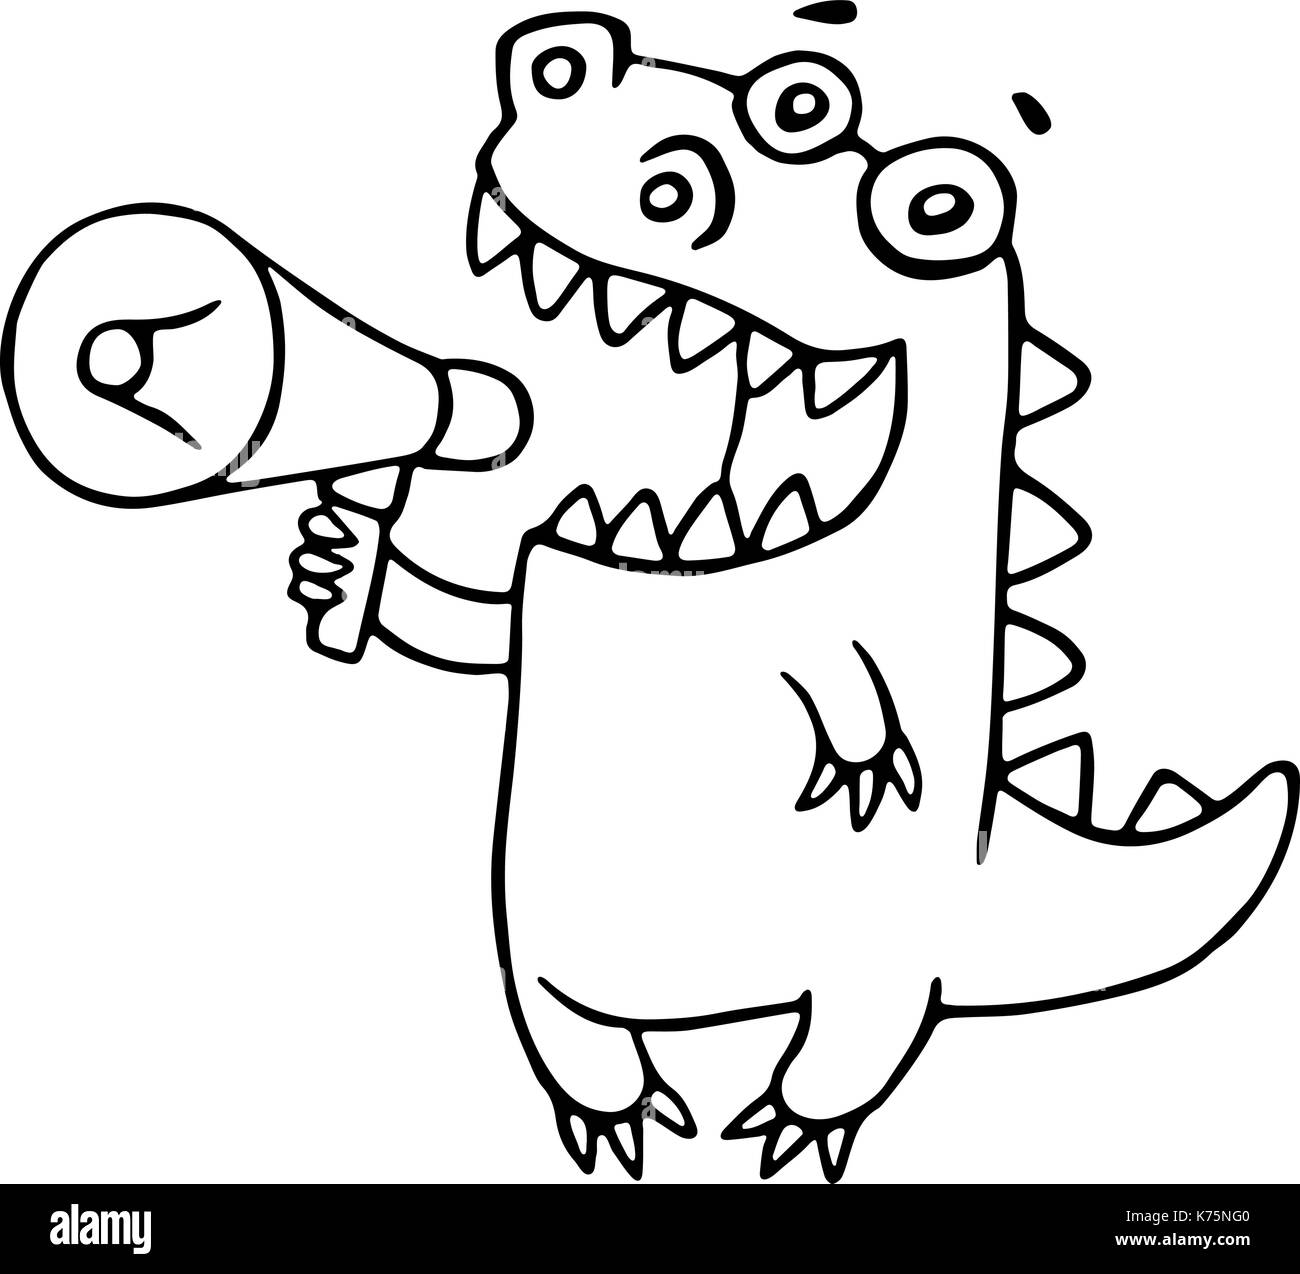 Cartoon dragon says in speakerphone. Vector illustration. Funny cute imaginary character. Stock Vector